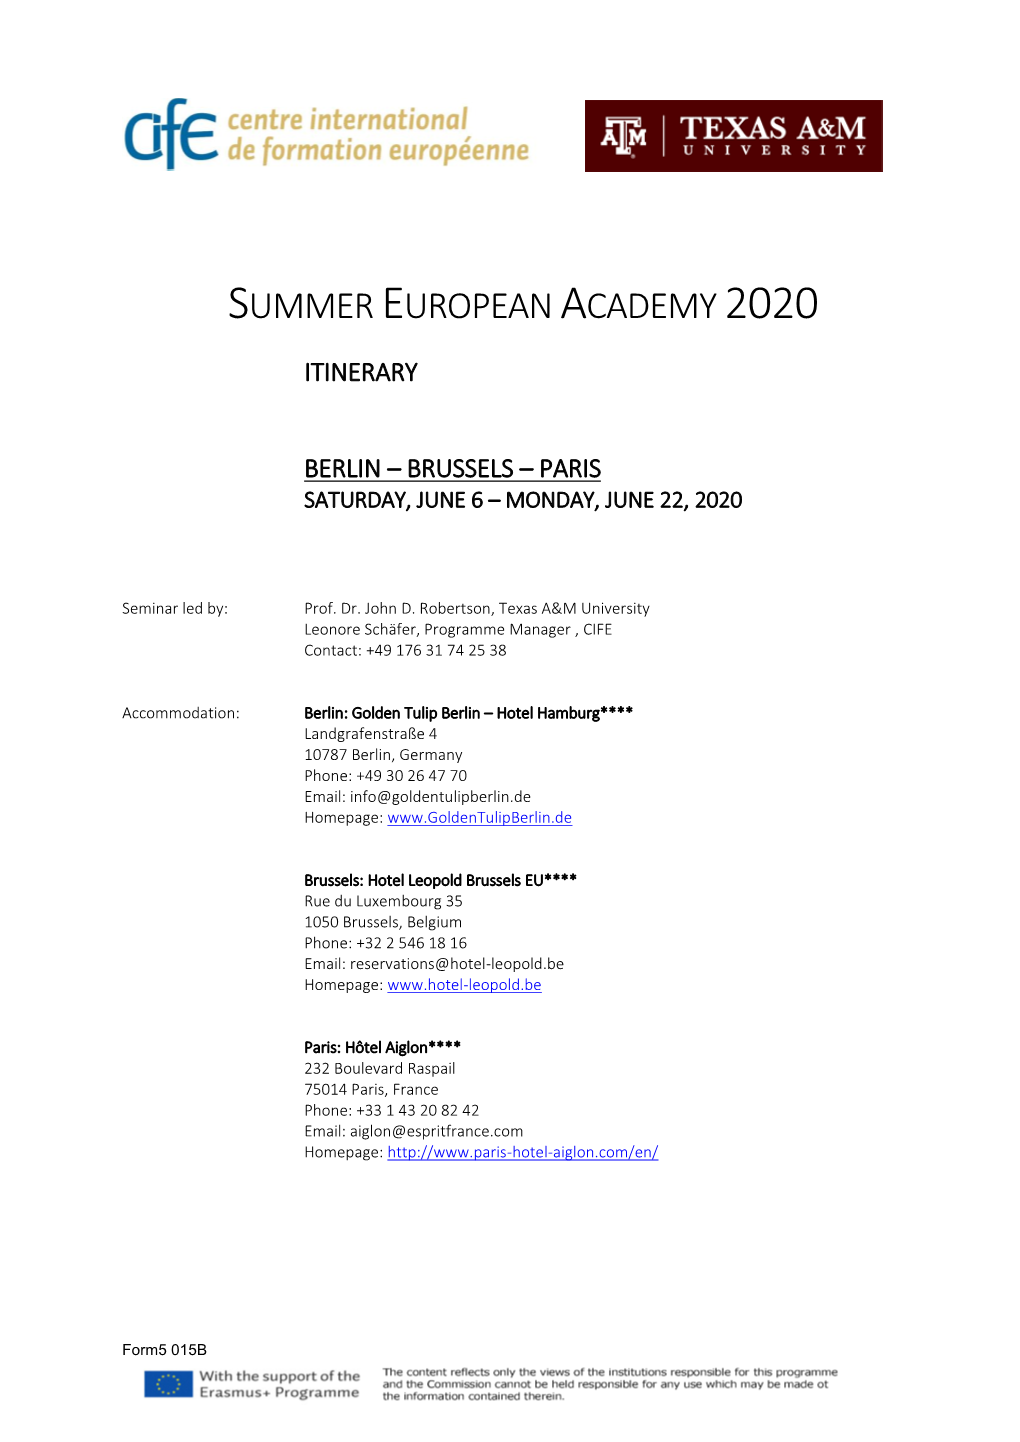 Summer European Academy 2011